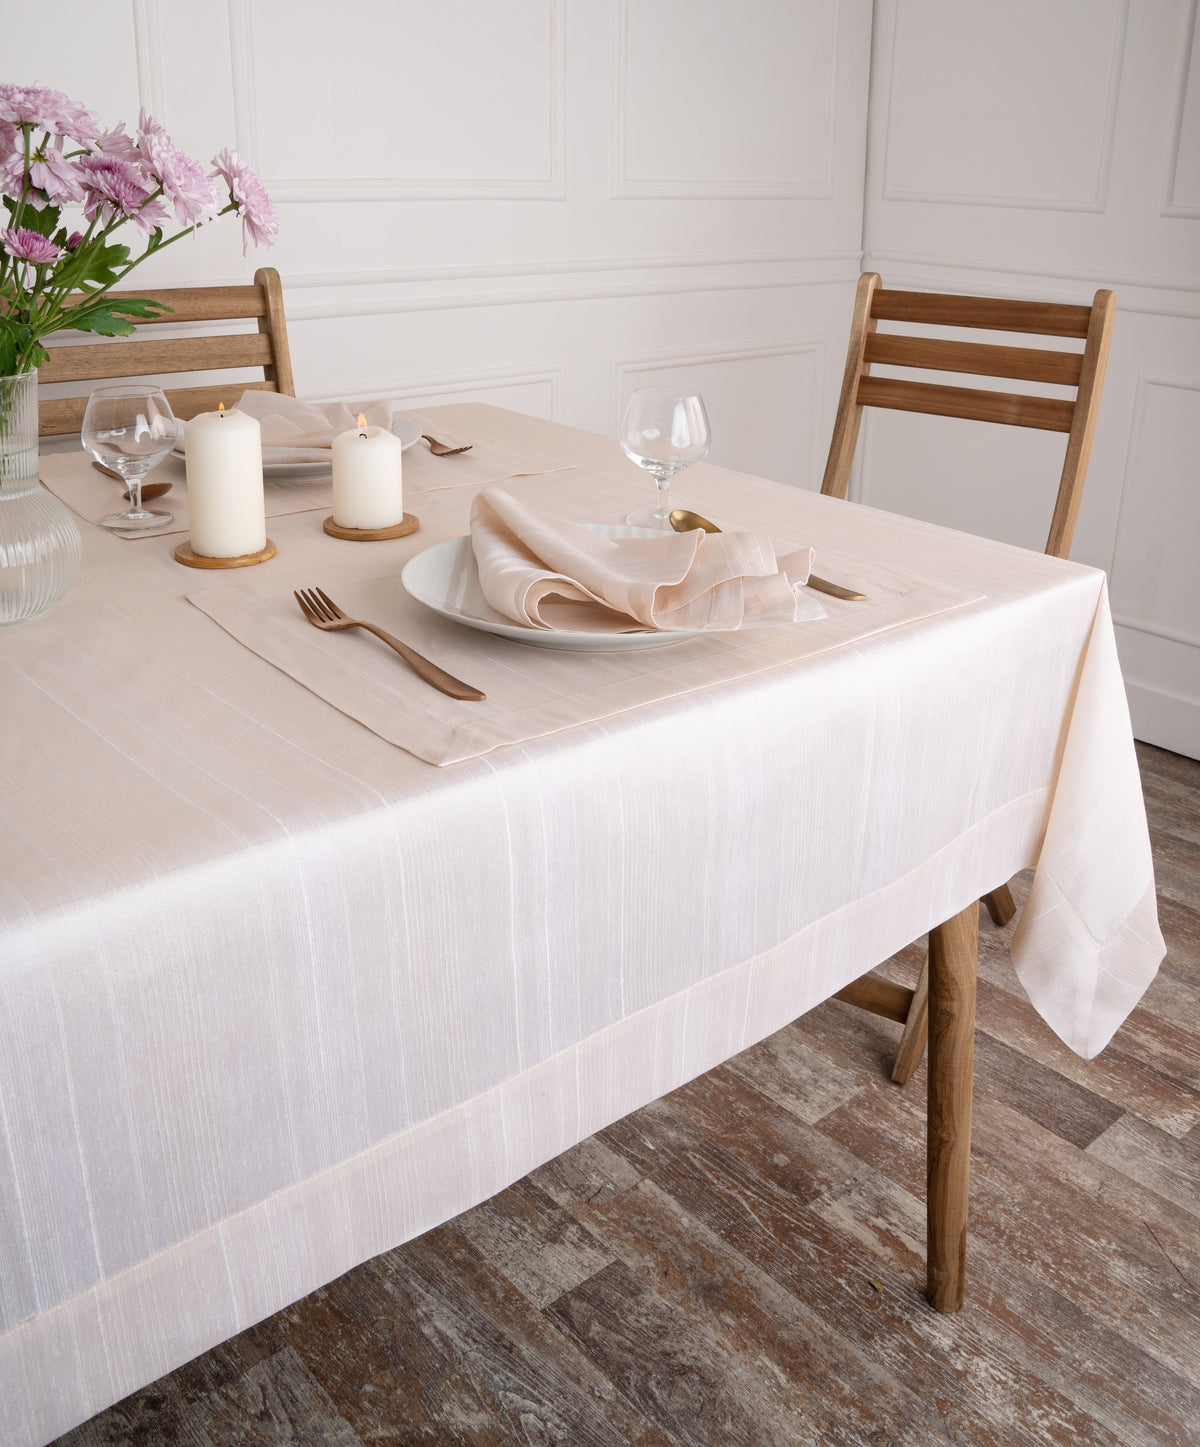 Light Natural Raw Silk Textured Tablecloth - Mitered Corner